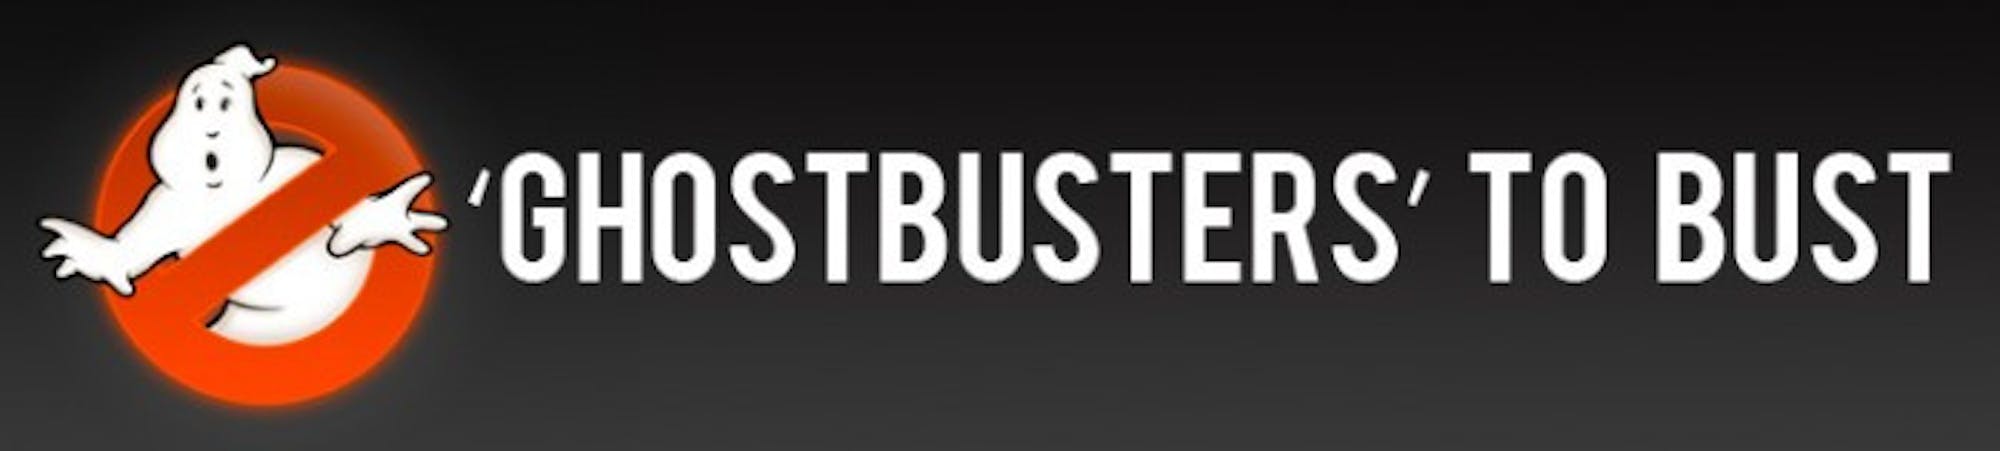 Ghostbusters_Web